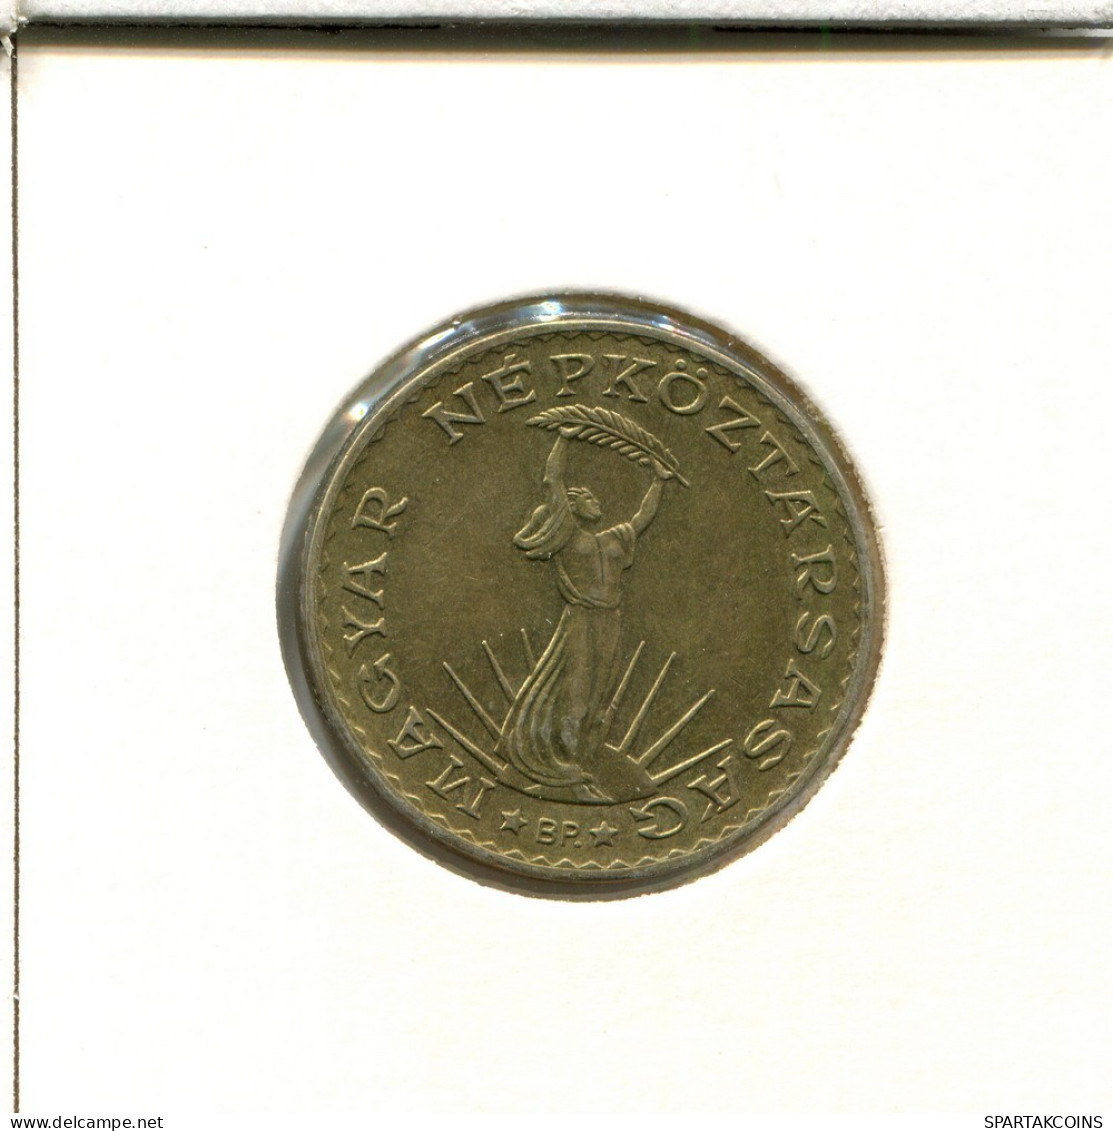 10 FORINT 1986 HUNGARY Coin #AS875.U.A - Hungary